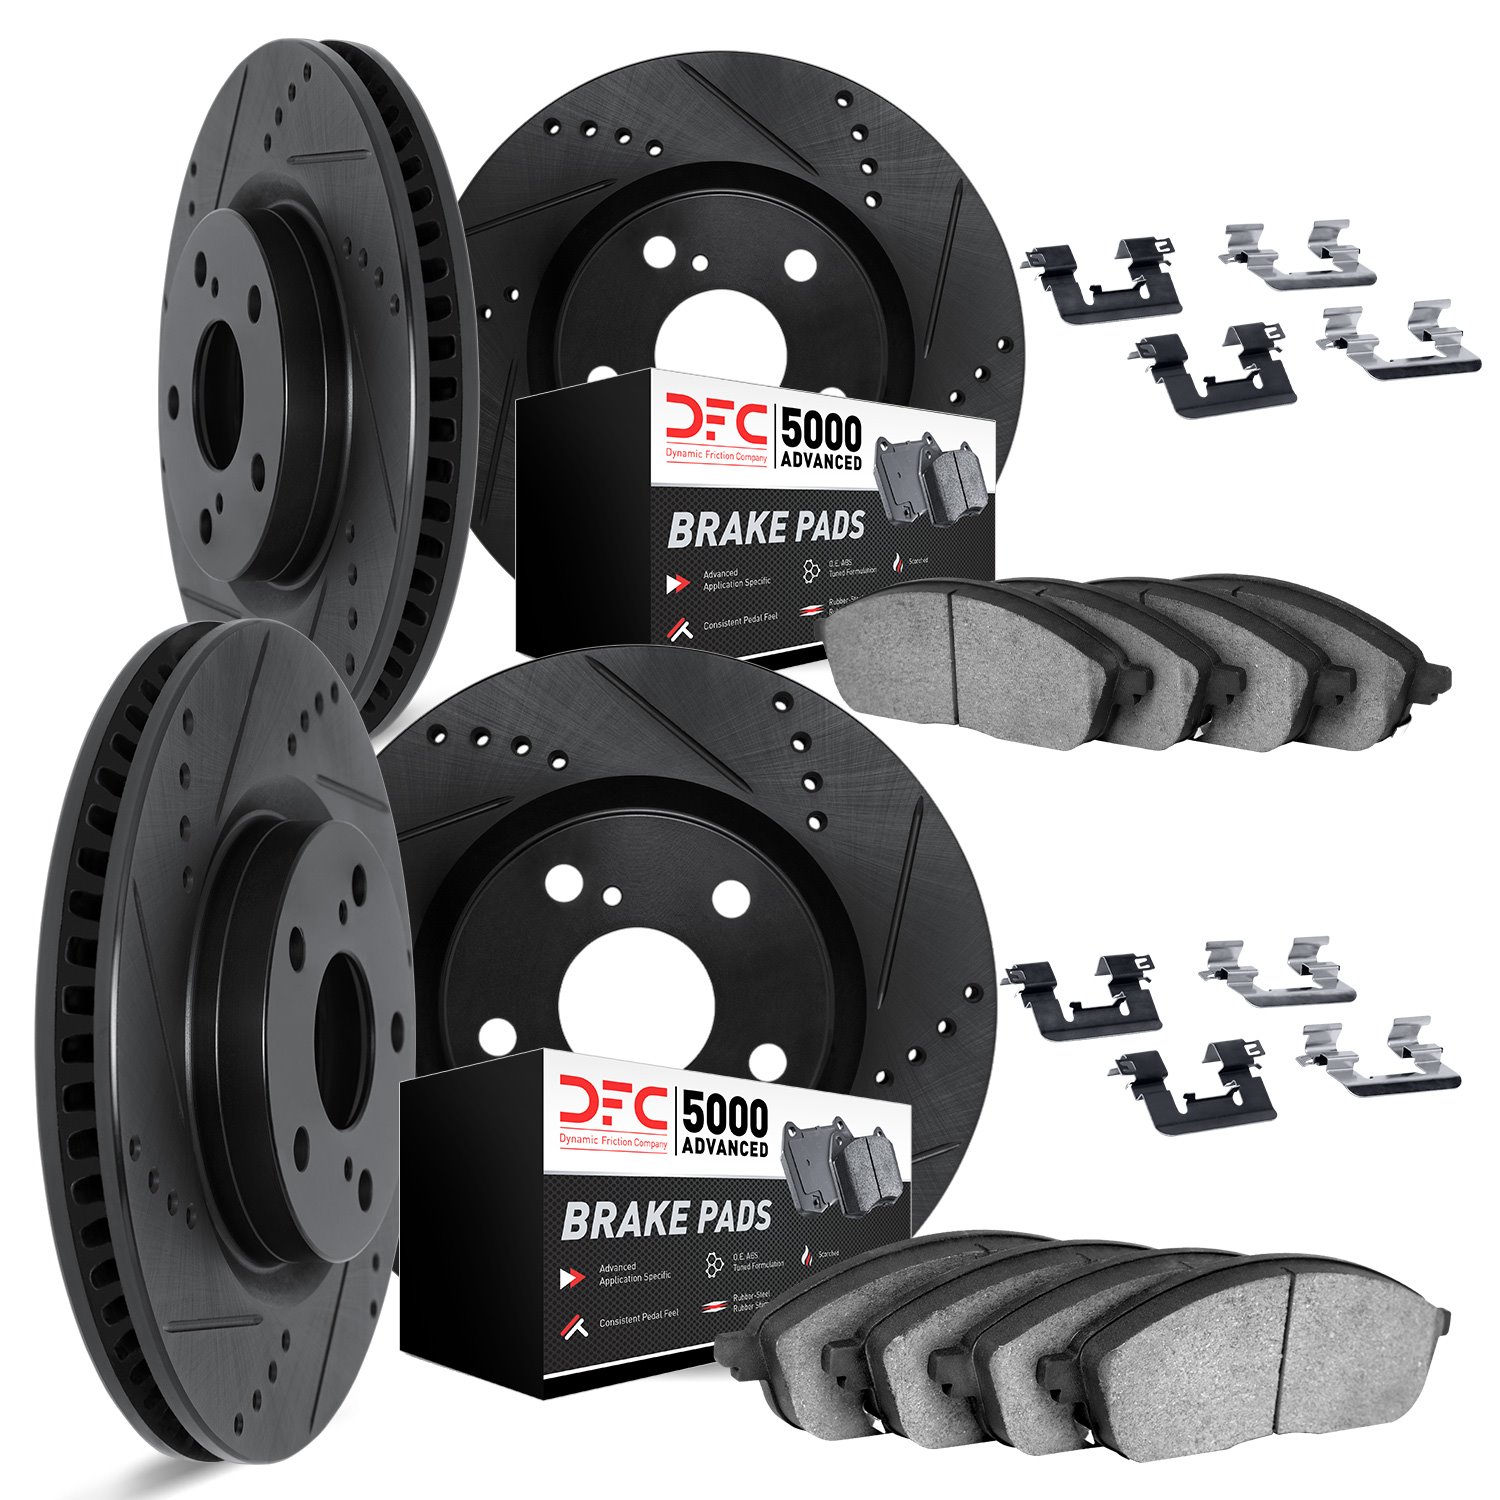 8514-67047 Drilled/Slotted Brake Rotors w/5000 Advanced Brake Pads Kit & Hardware [Black], 2006-2020 Infiniti/Nissan, Position: